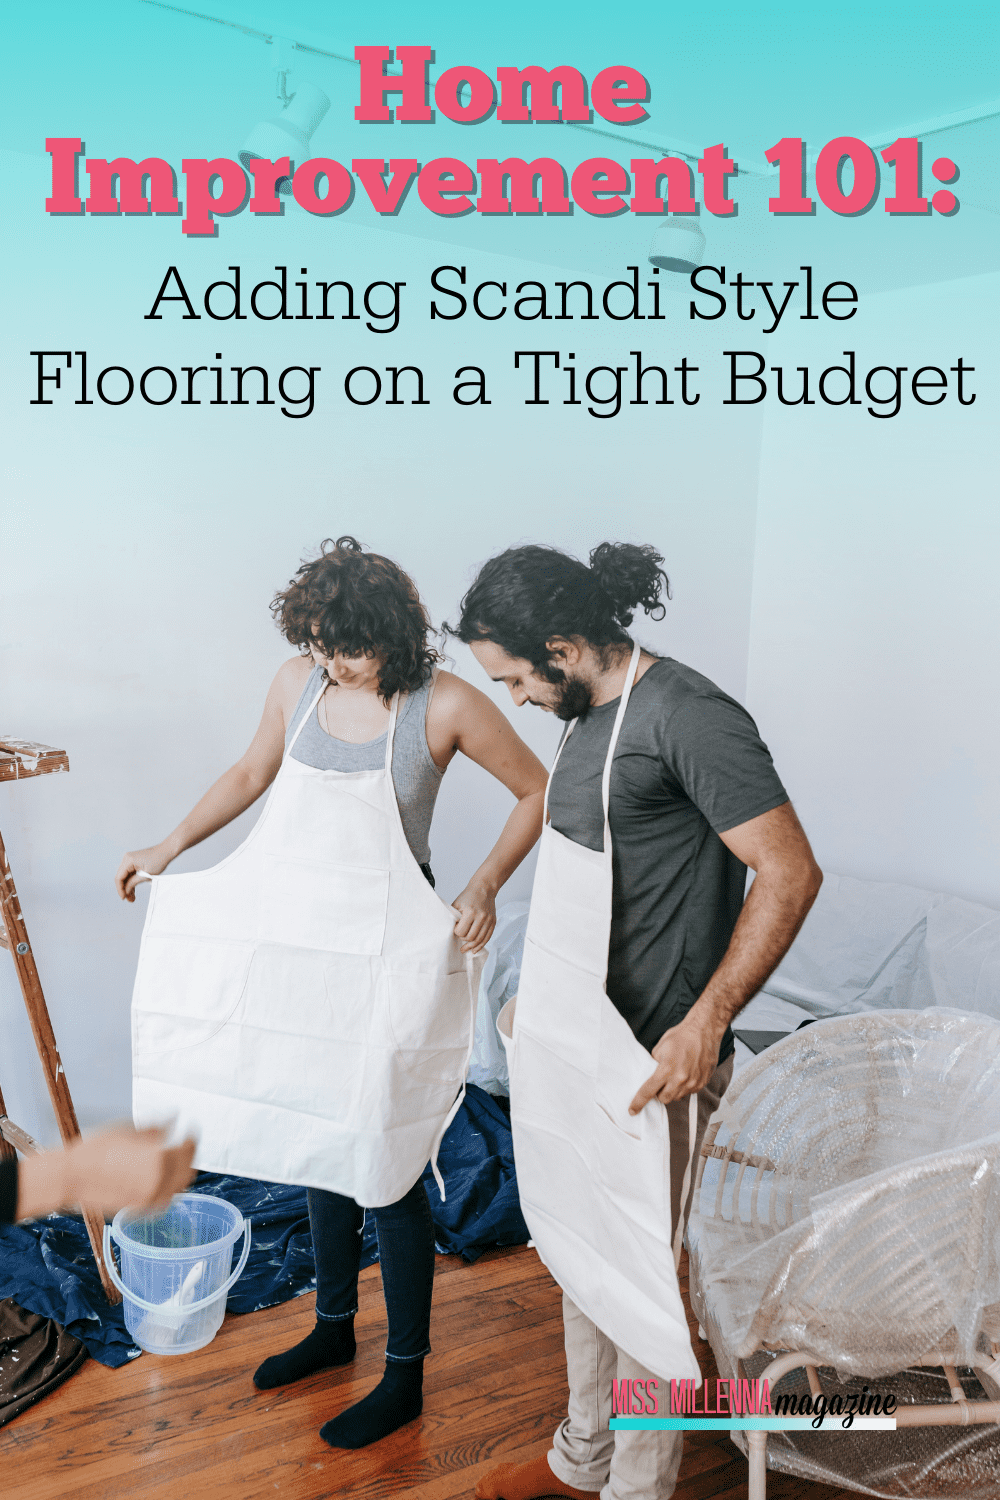 Home Improvement 101: Adding Scandi Style Flooring on a Tight Budget